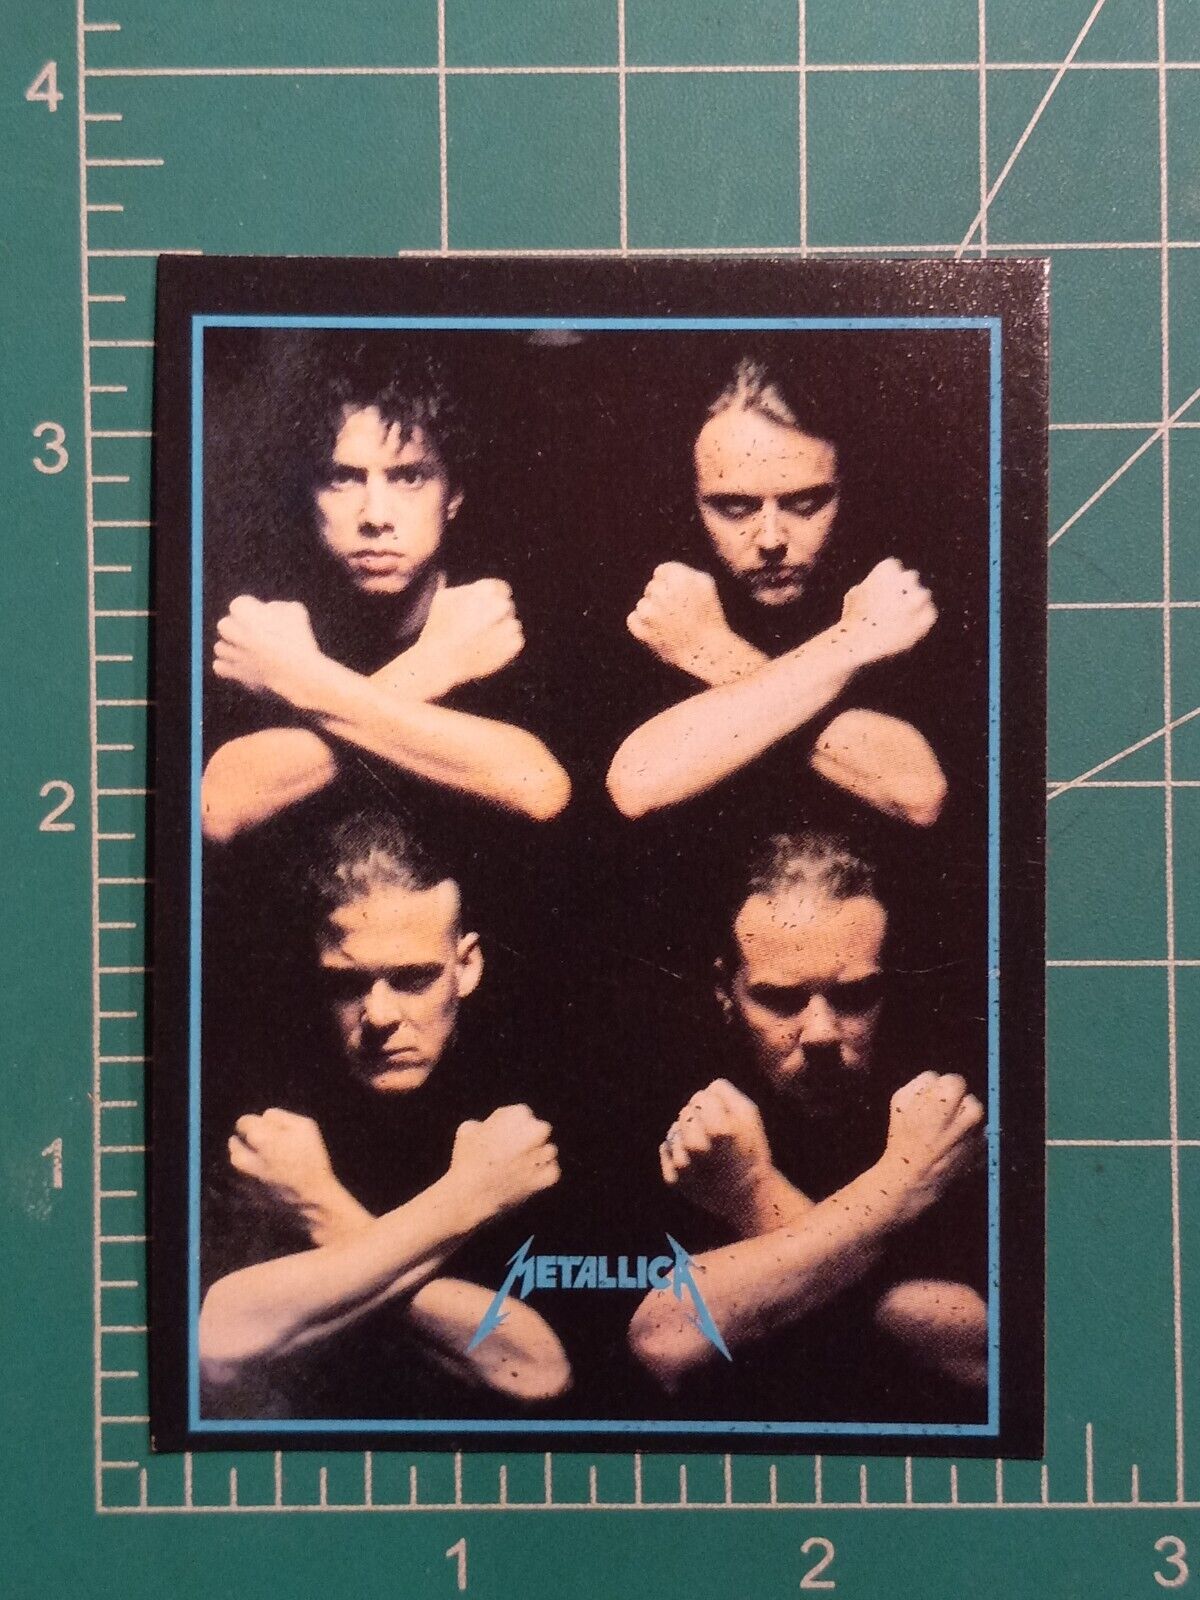 1994 Argentina ULTRA FIGUS Rock MUSIC  Card METALLICA GROUP BAND JAMES LARS X X